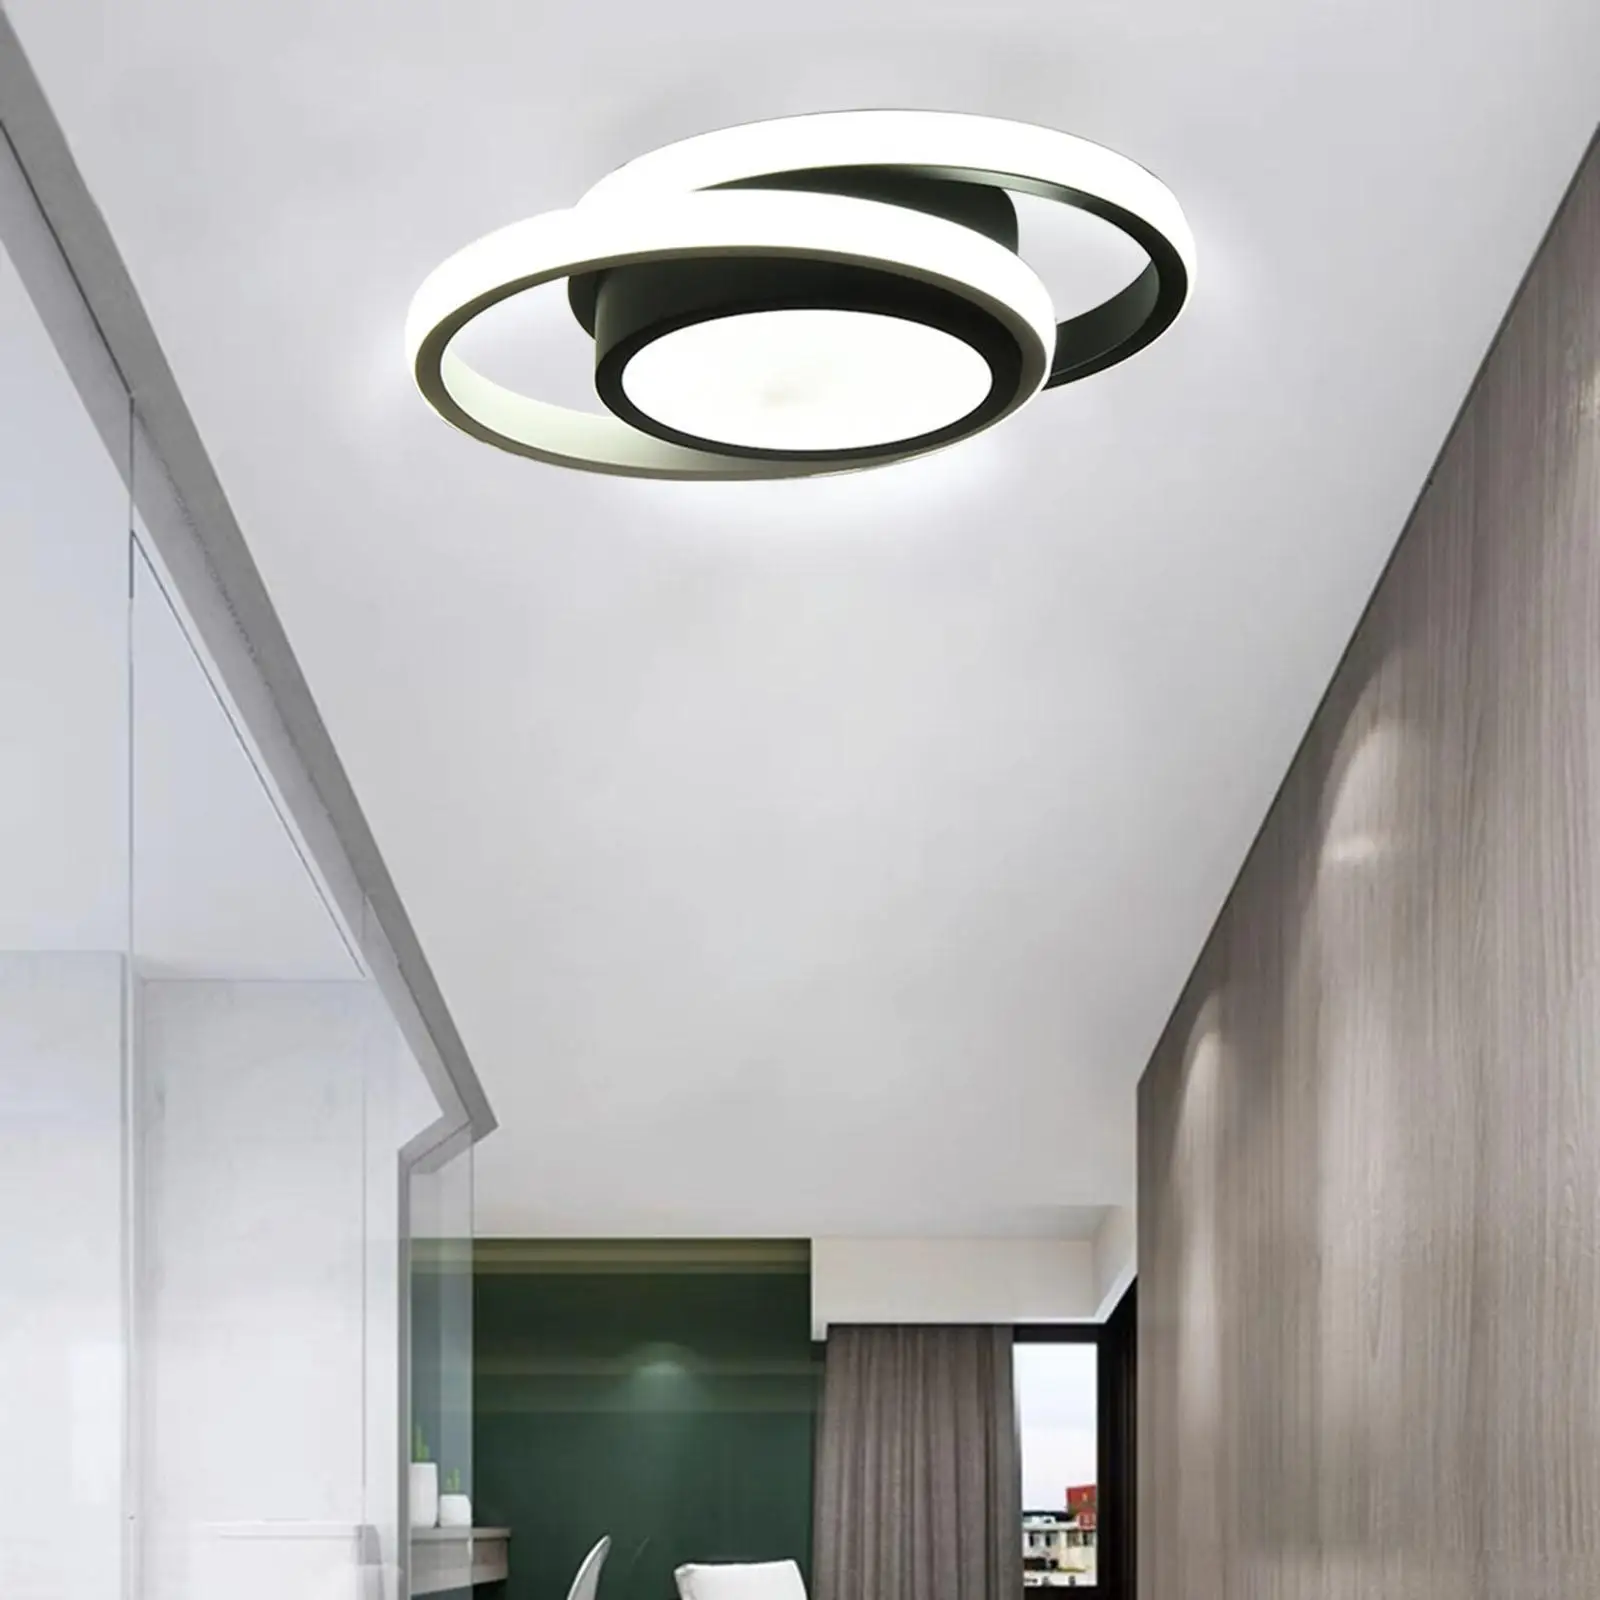 LED Ceiling Light Ceiling Lamp Bedroom Kitchen Hallway Fixtures